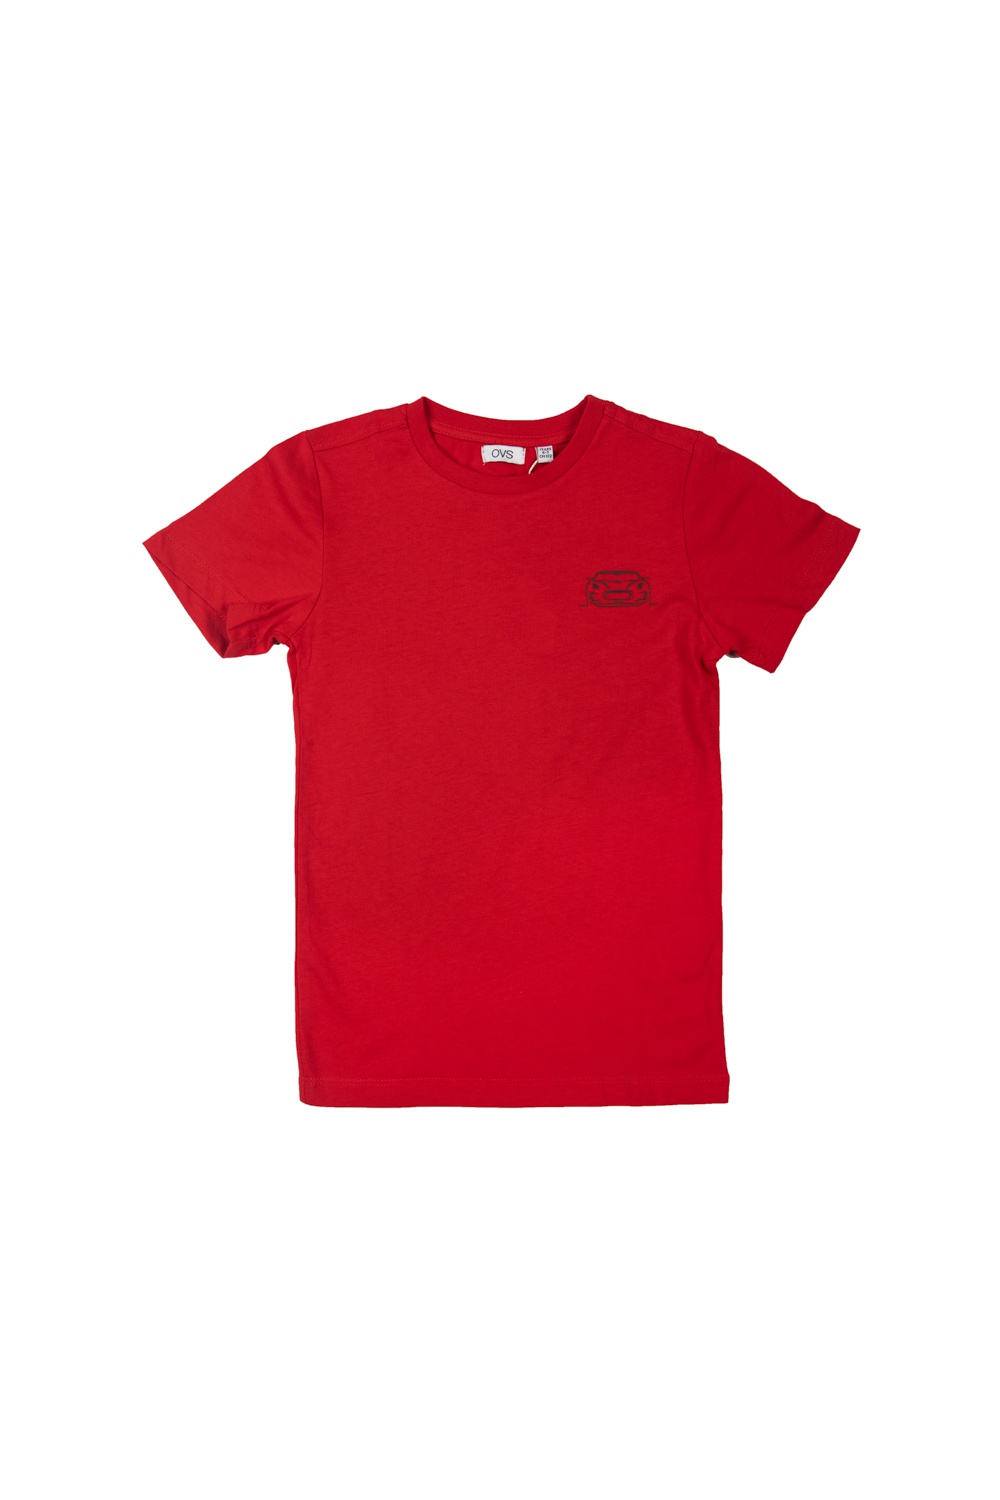 OVS Boys Solid Color Graphic Side Printed T-Shirt | Odel.lk